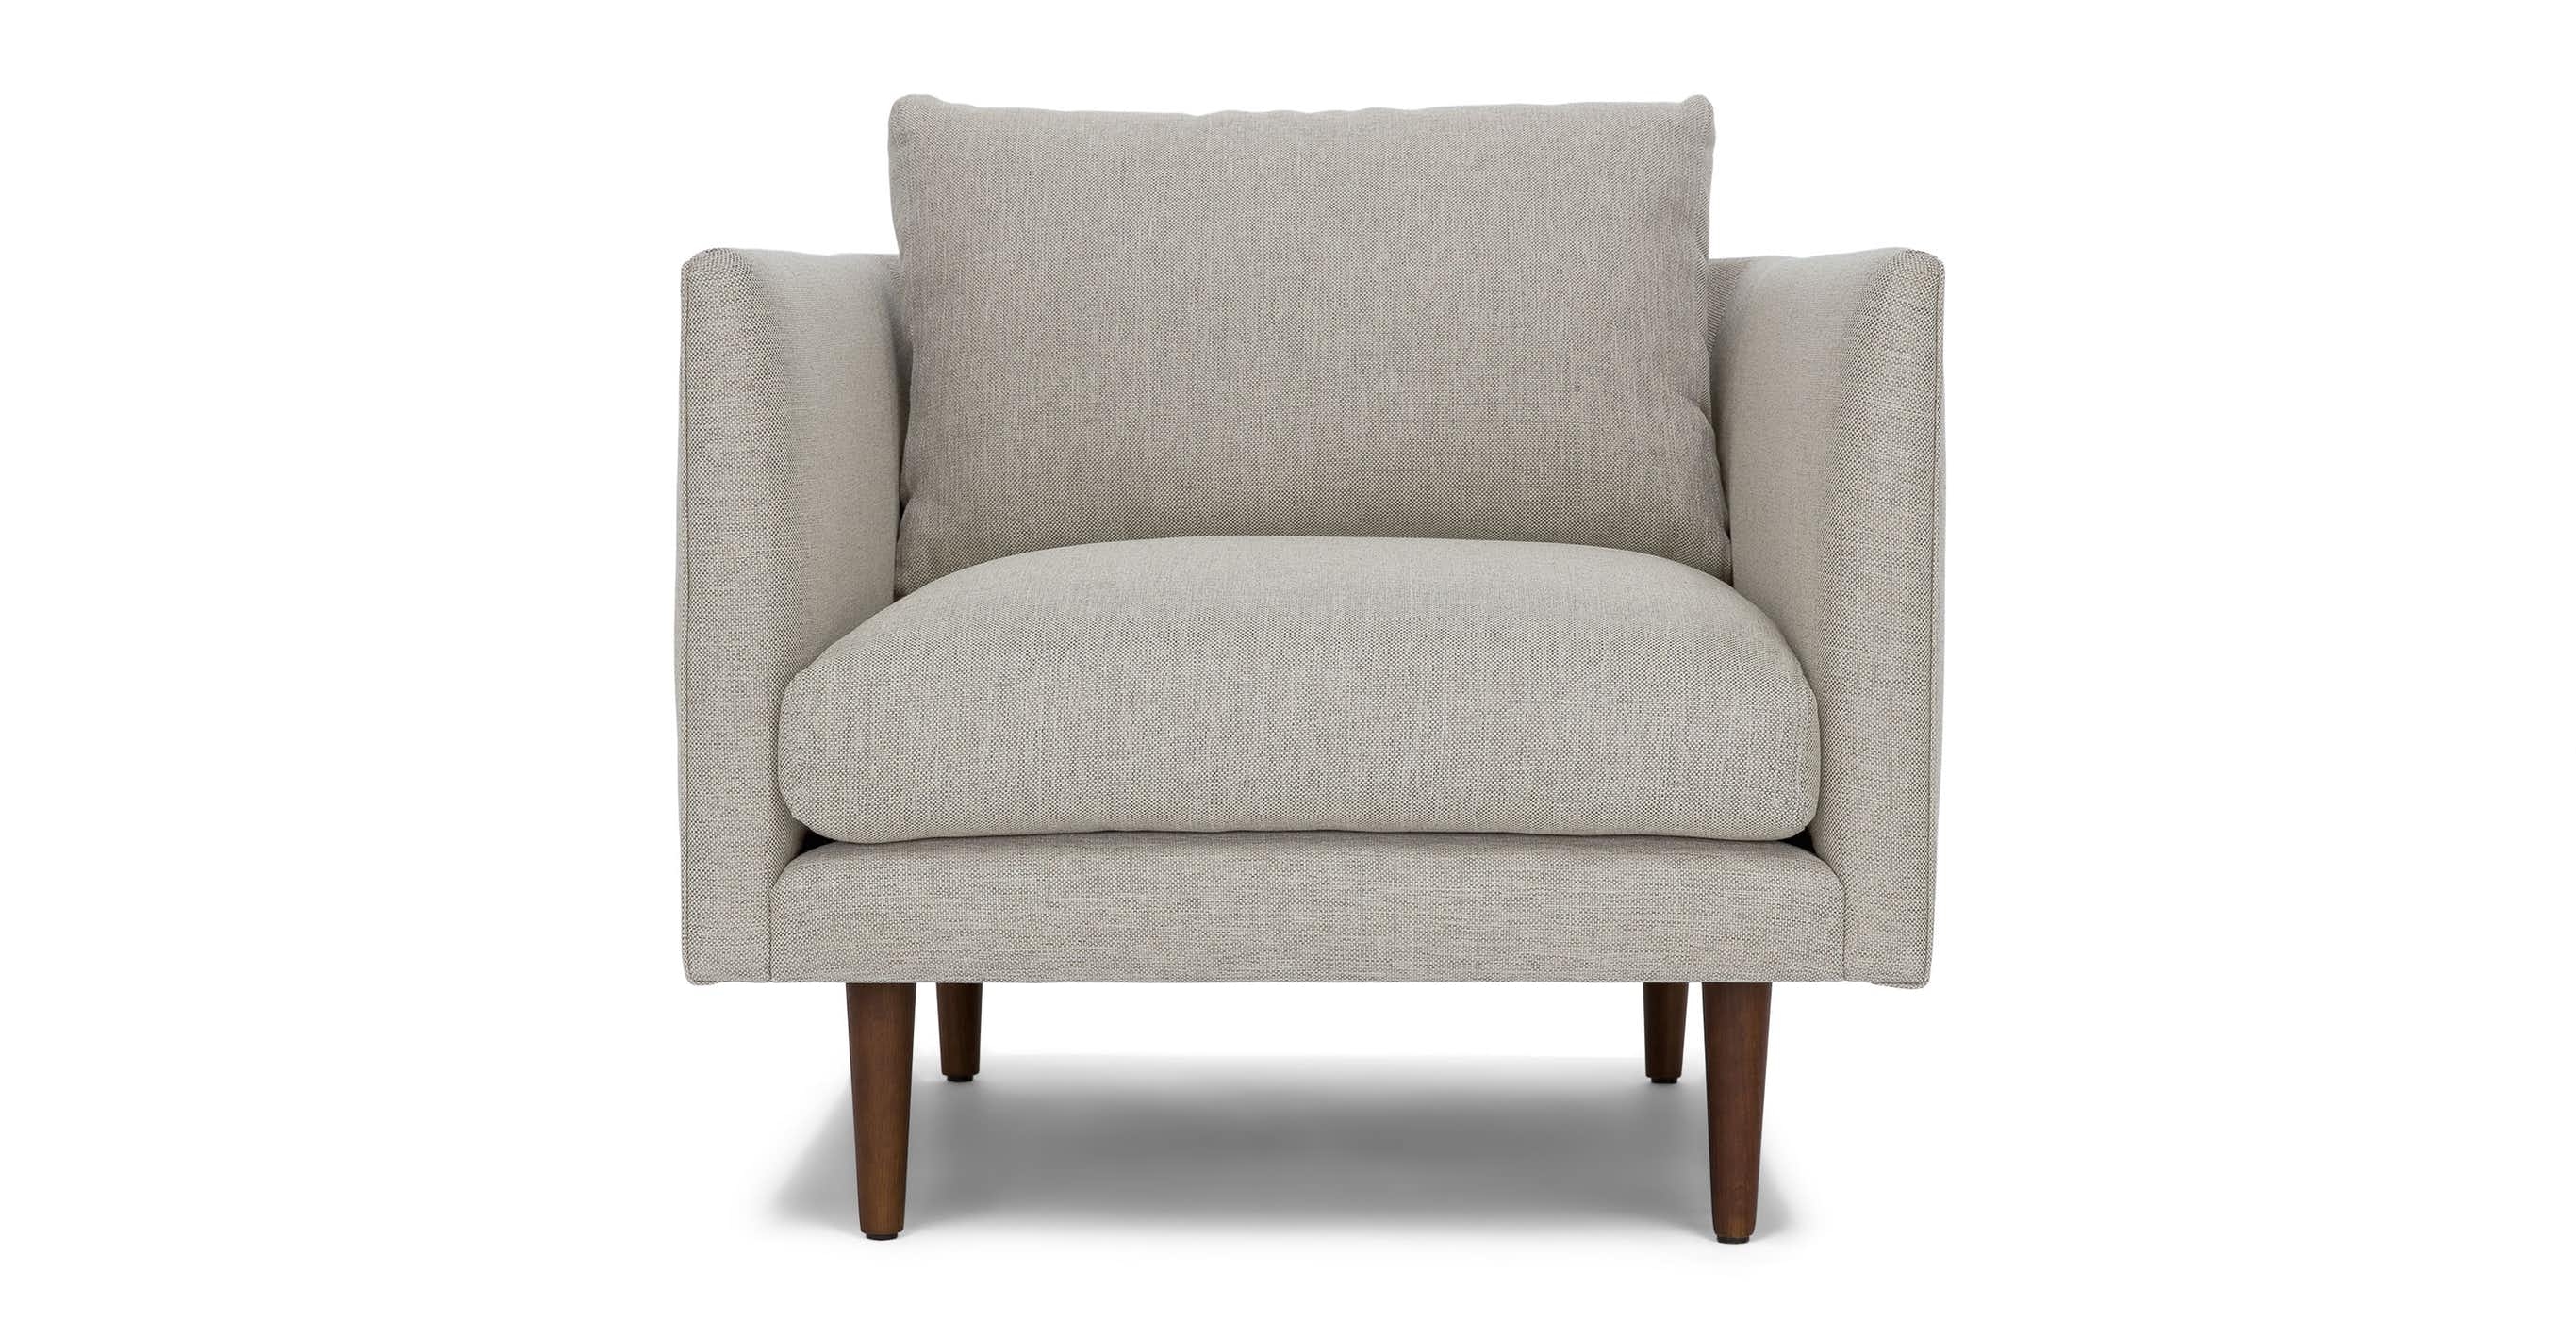 Burrard Seasalt Gray Chair - Image 4